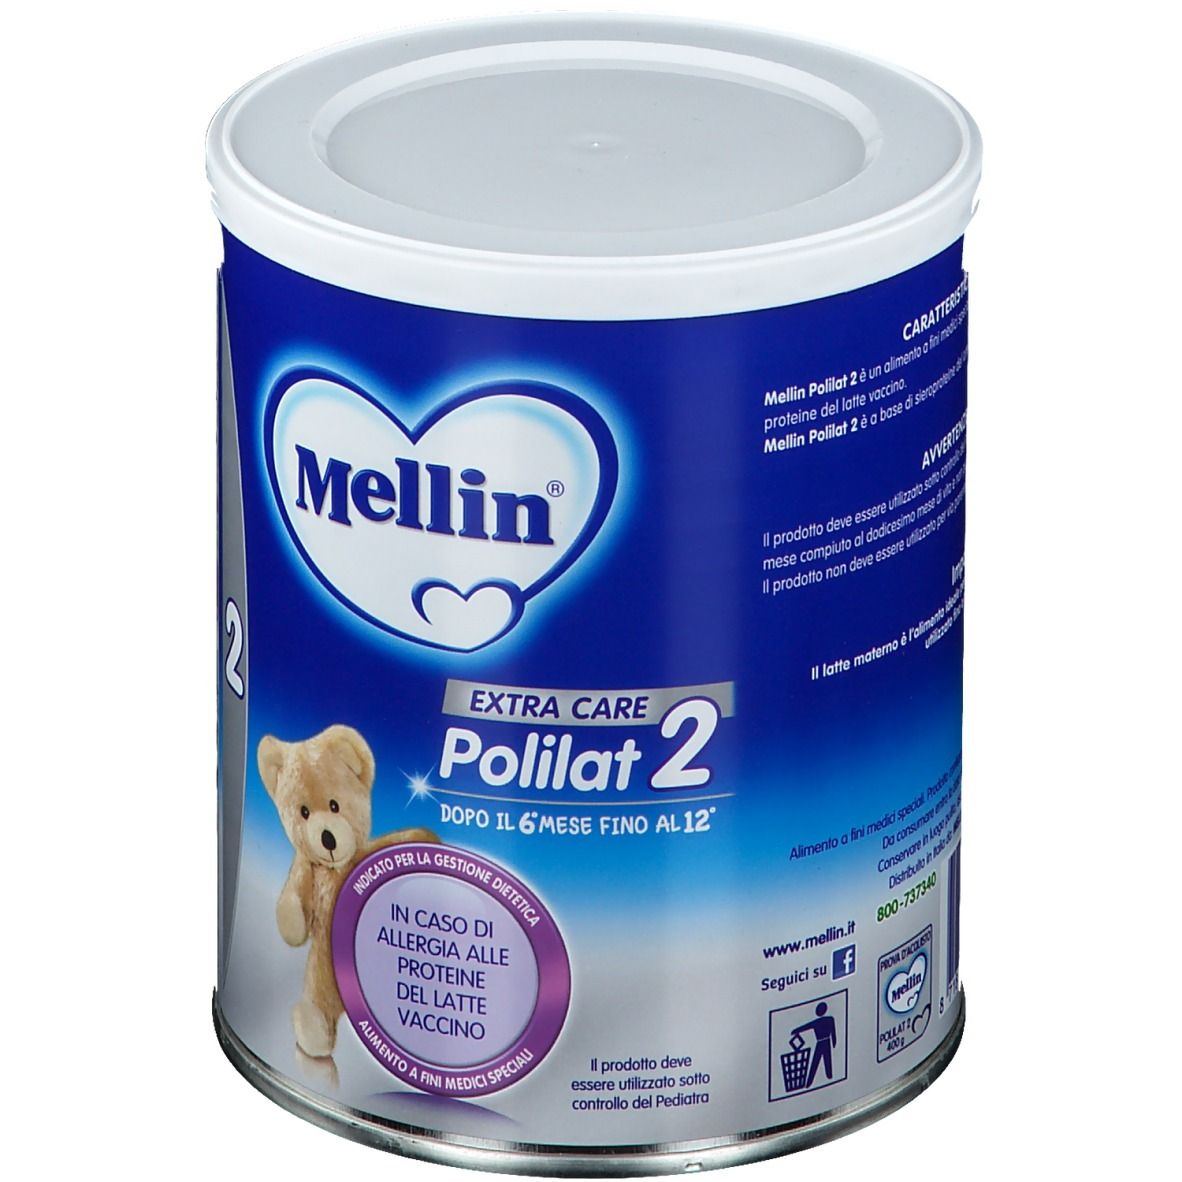 Mellin® Polilat 2